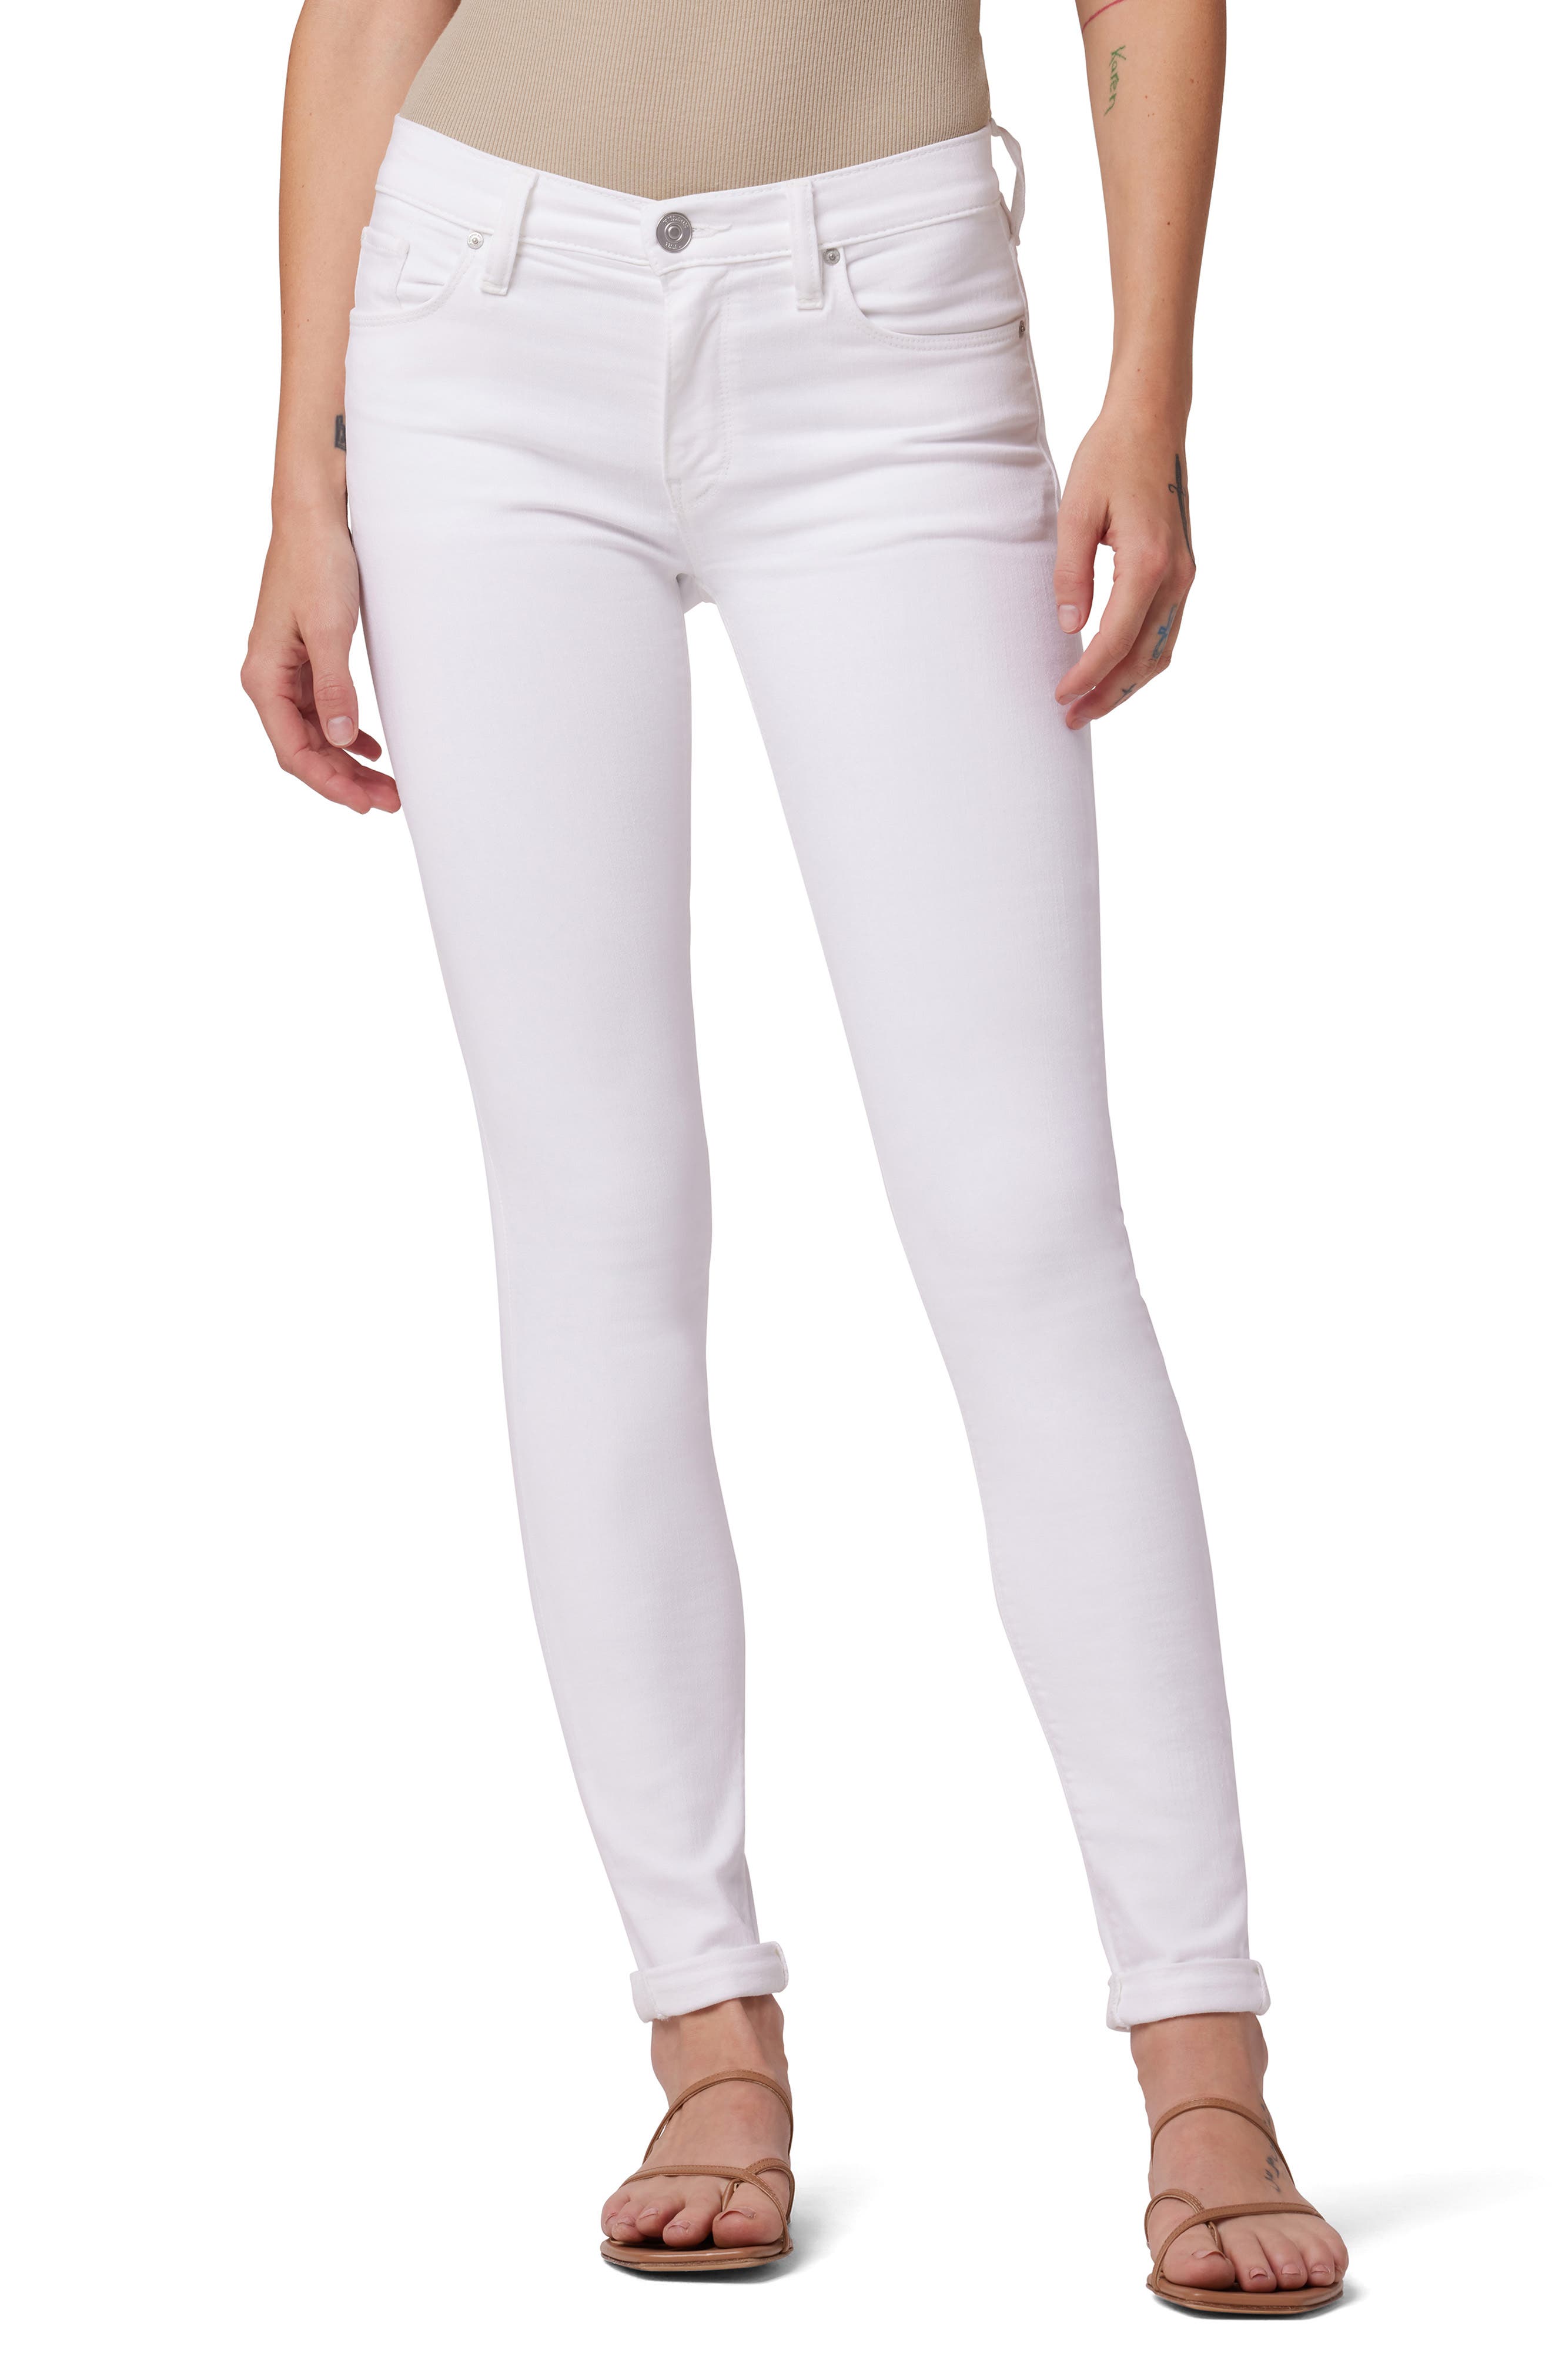 BNWT NEXT new Ladies white skinny jeans stretch mid rise 10/16/18/22 R & L 